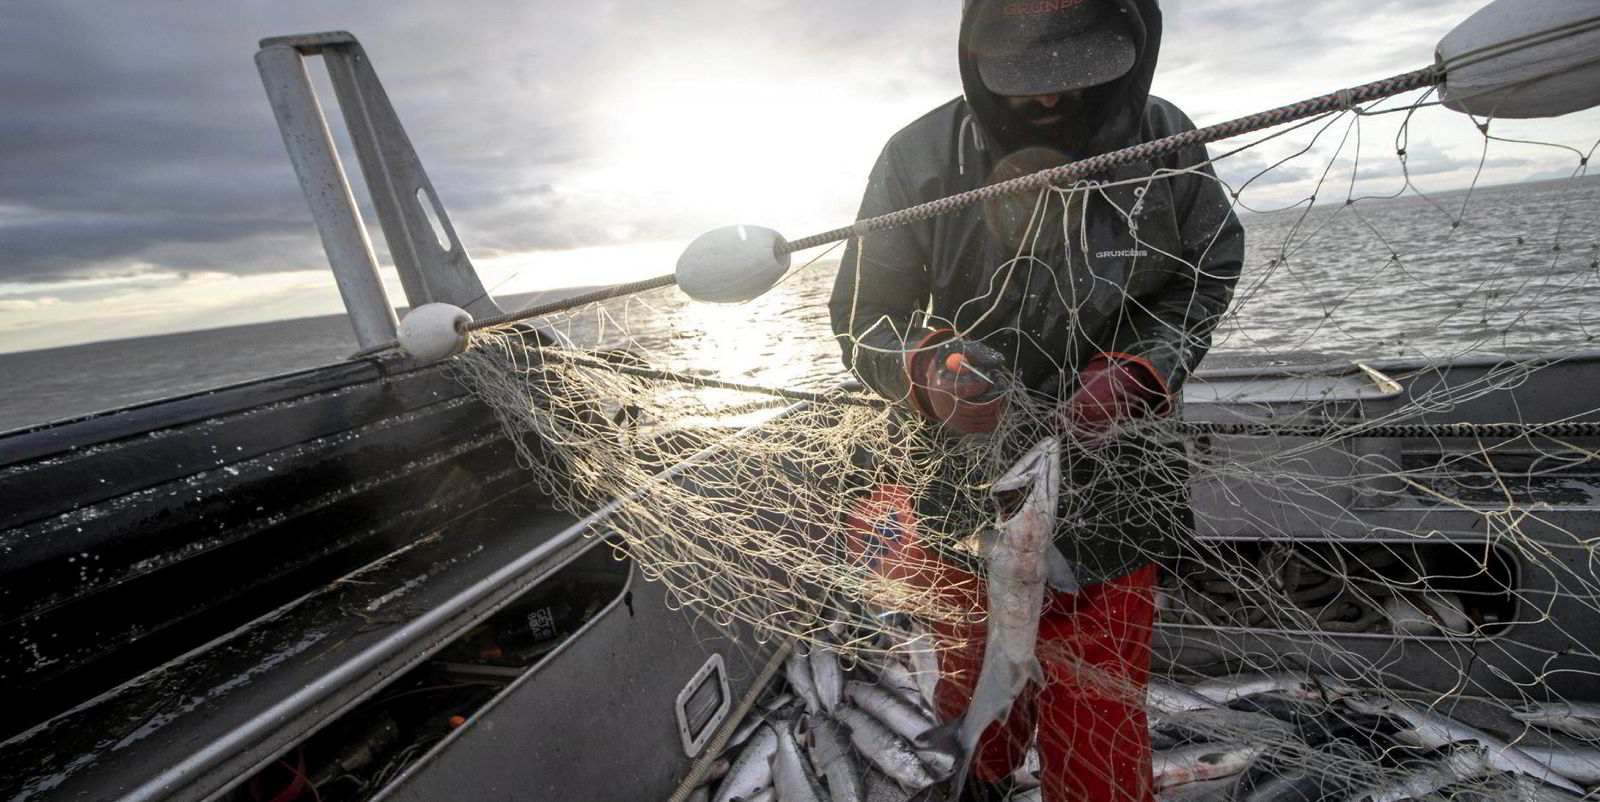 Shades of Silver Bay? Bristol Bay salmon fishermen may forge their